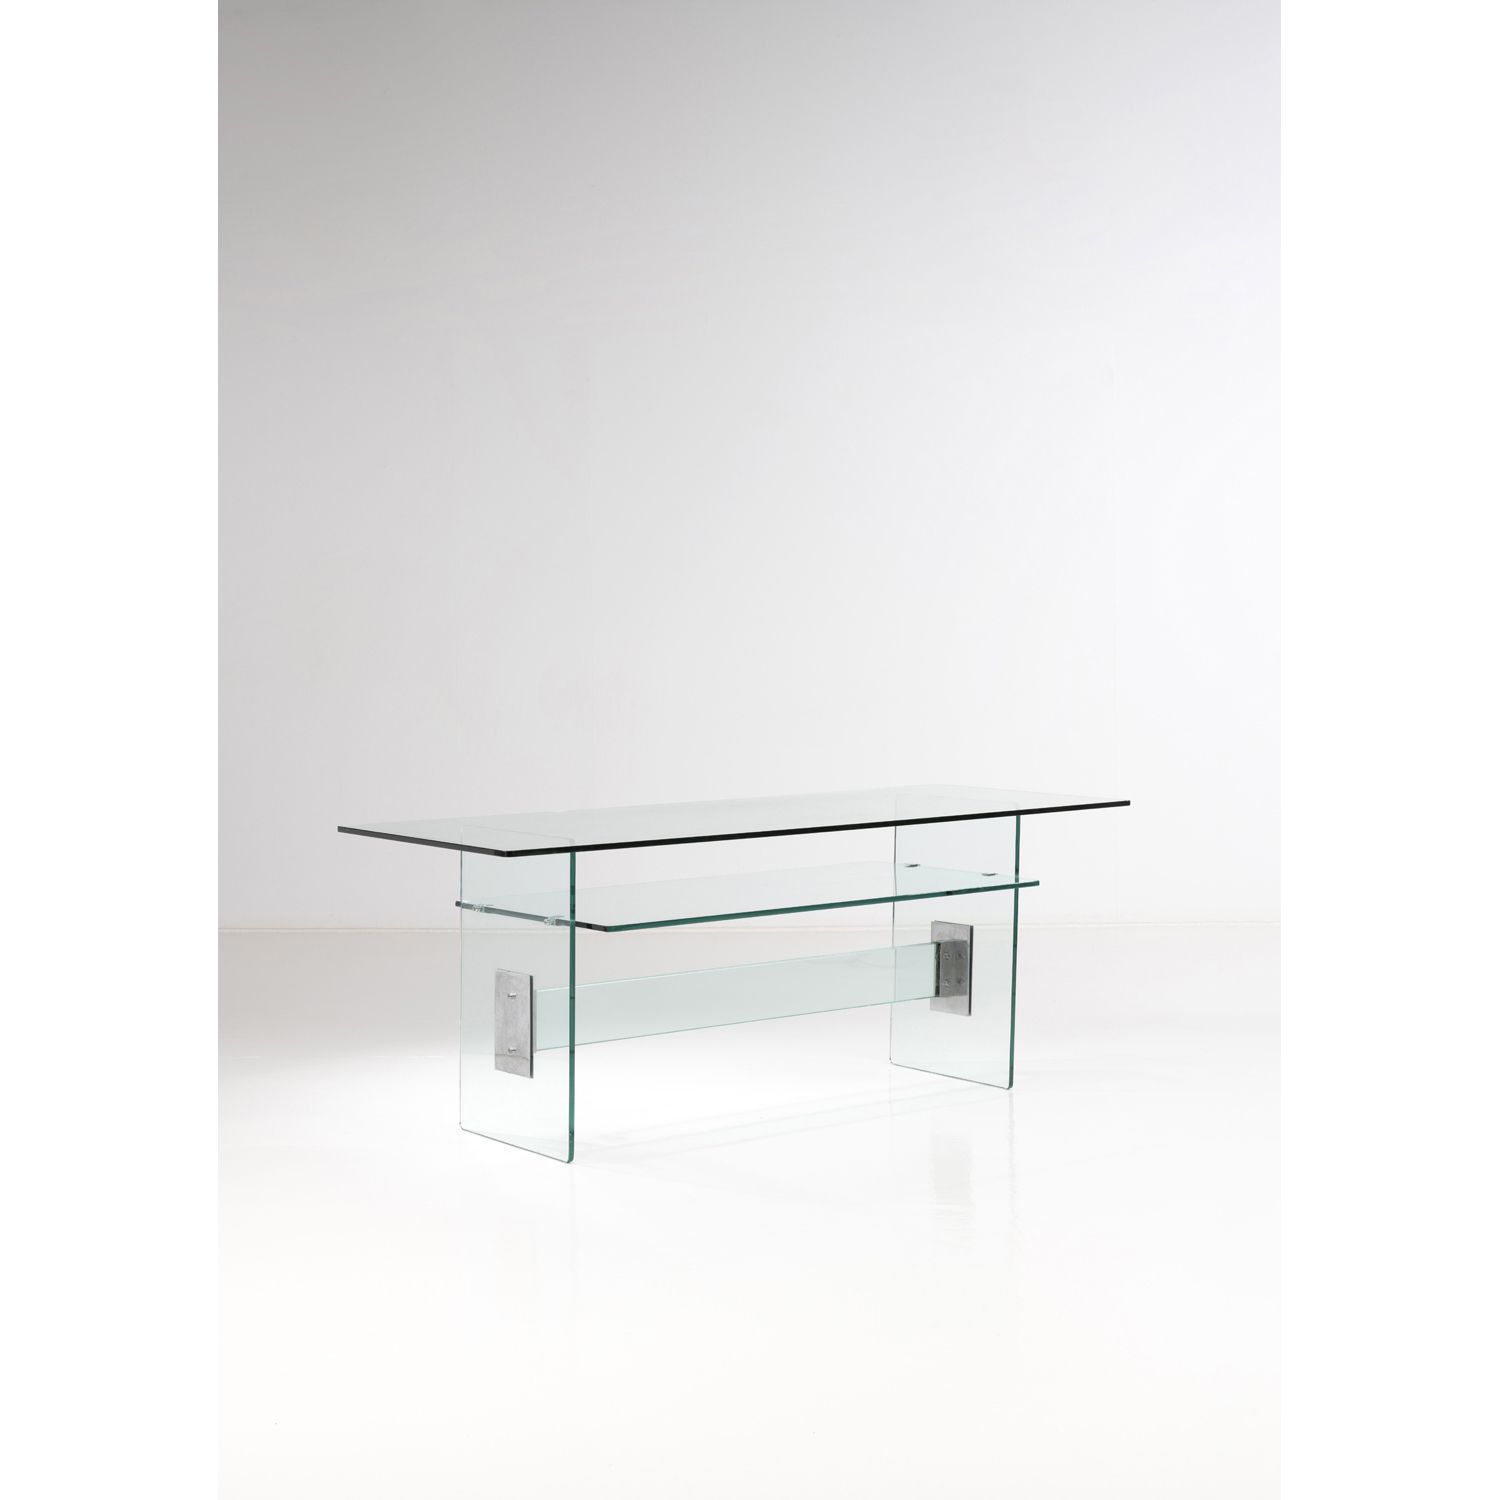 Null Fontana Arte (20), 归功于

表

玻璃和镀铬金属

1960年左右创建的模型

高77×宽200×深80厘米